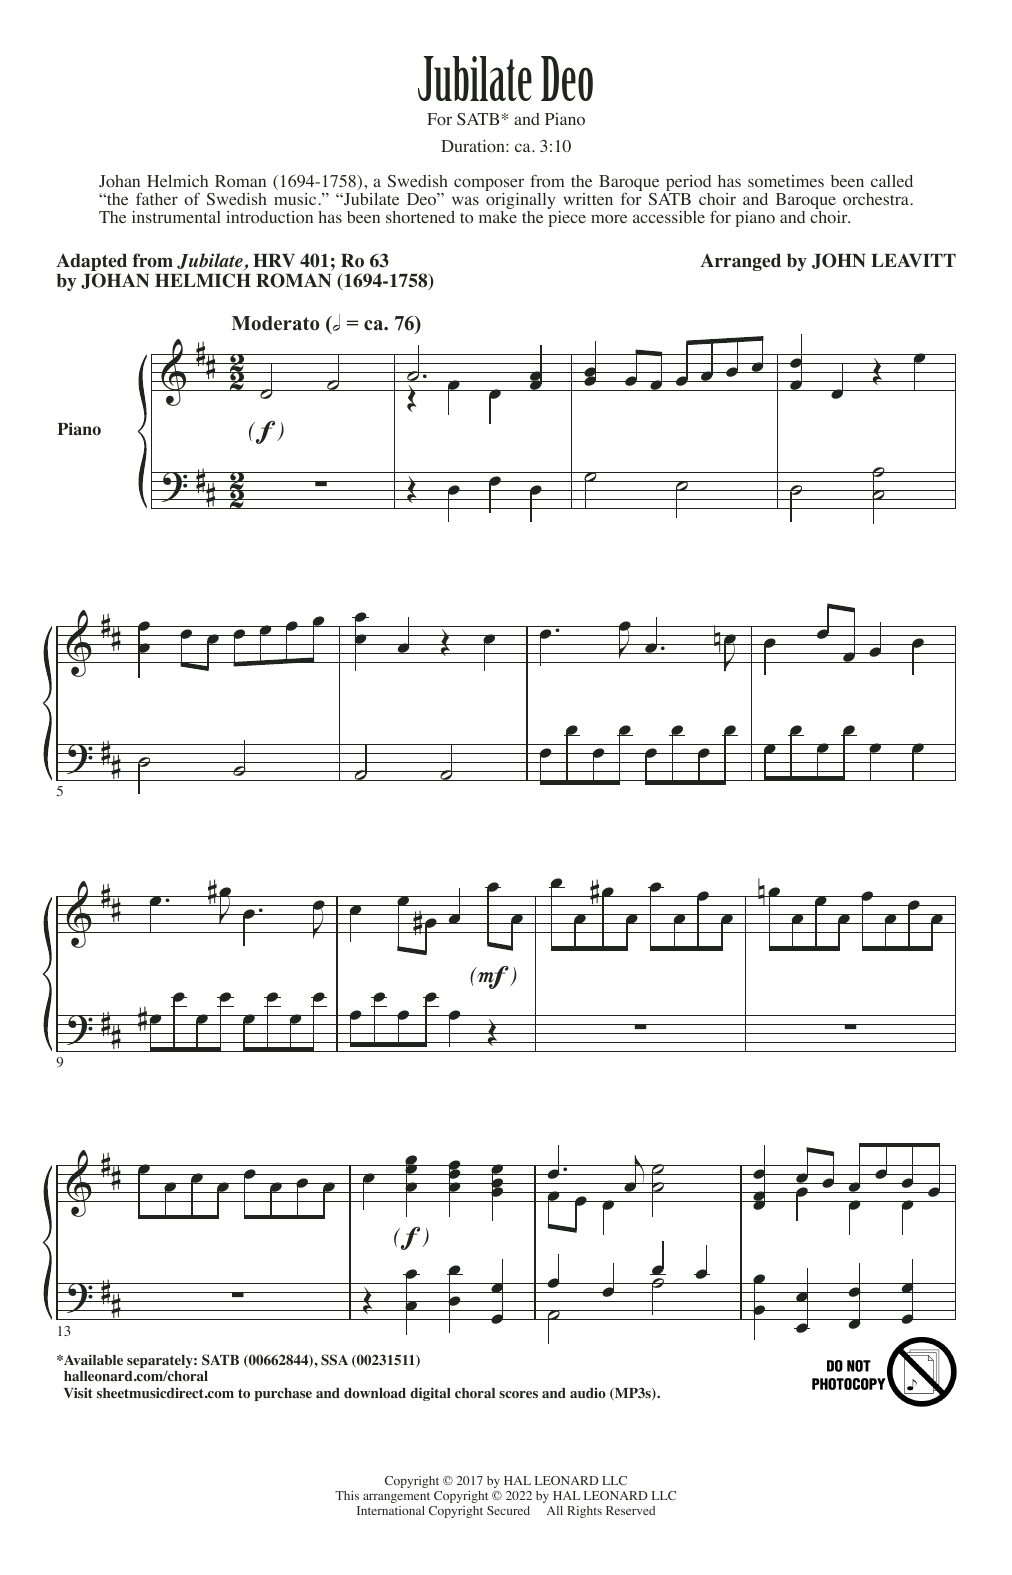 Johan Helmich Roman Jubilate Deo (arr. John Leavitt) Sheet Music Notes & Chords for SATB Choir - Download or Print PDF